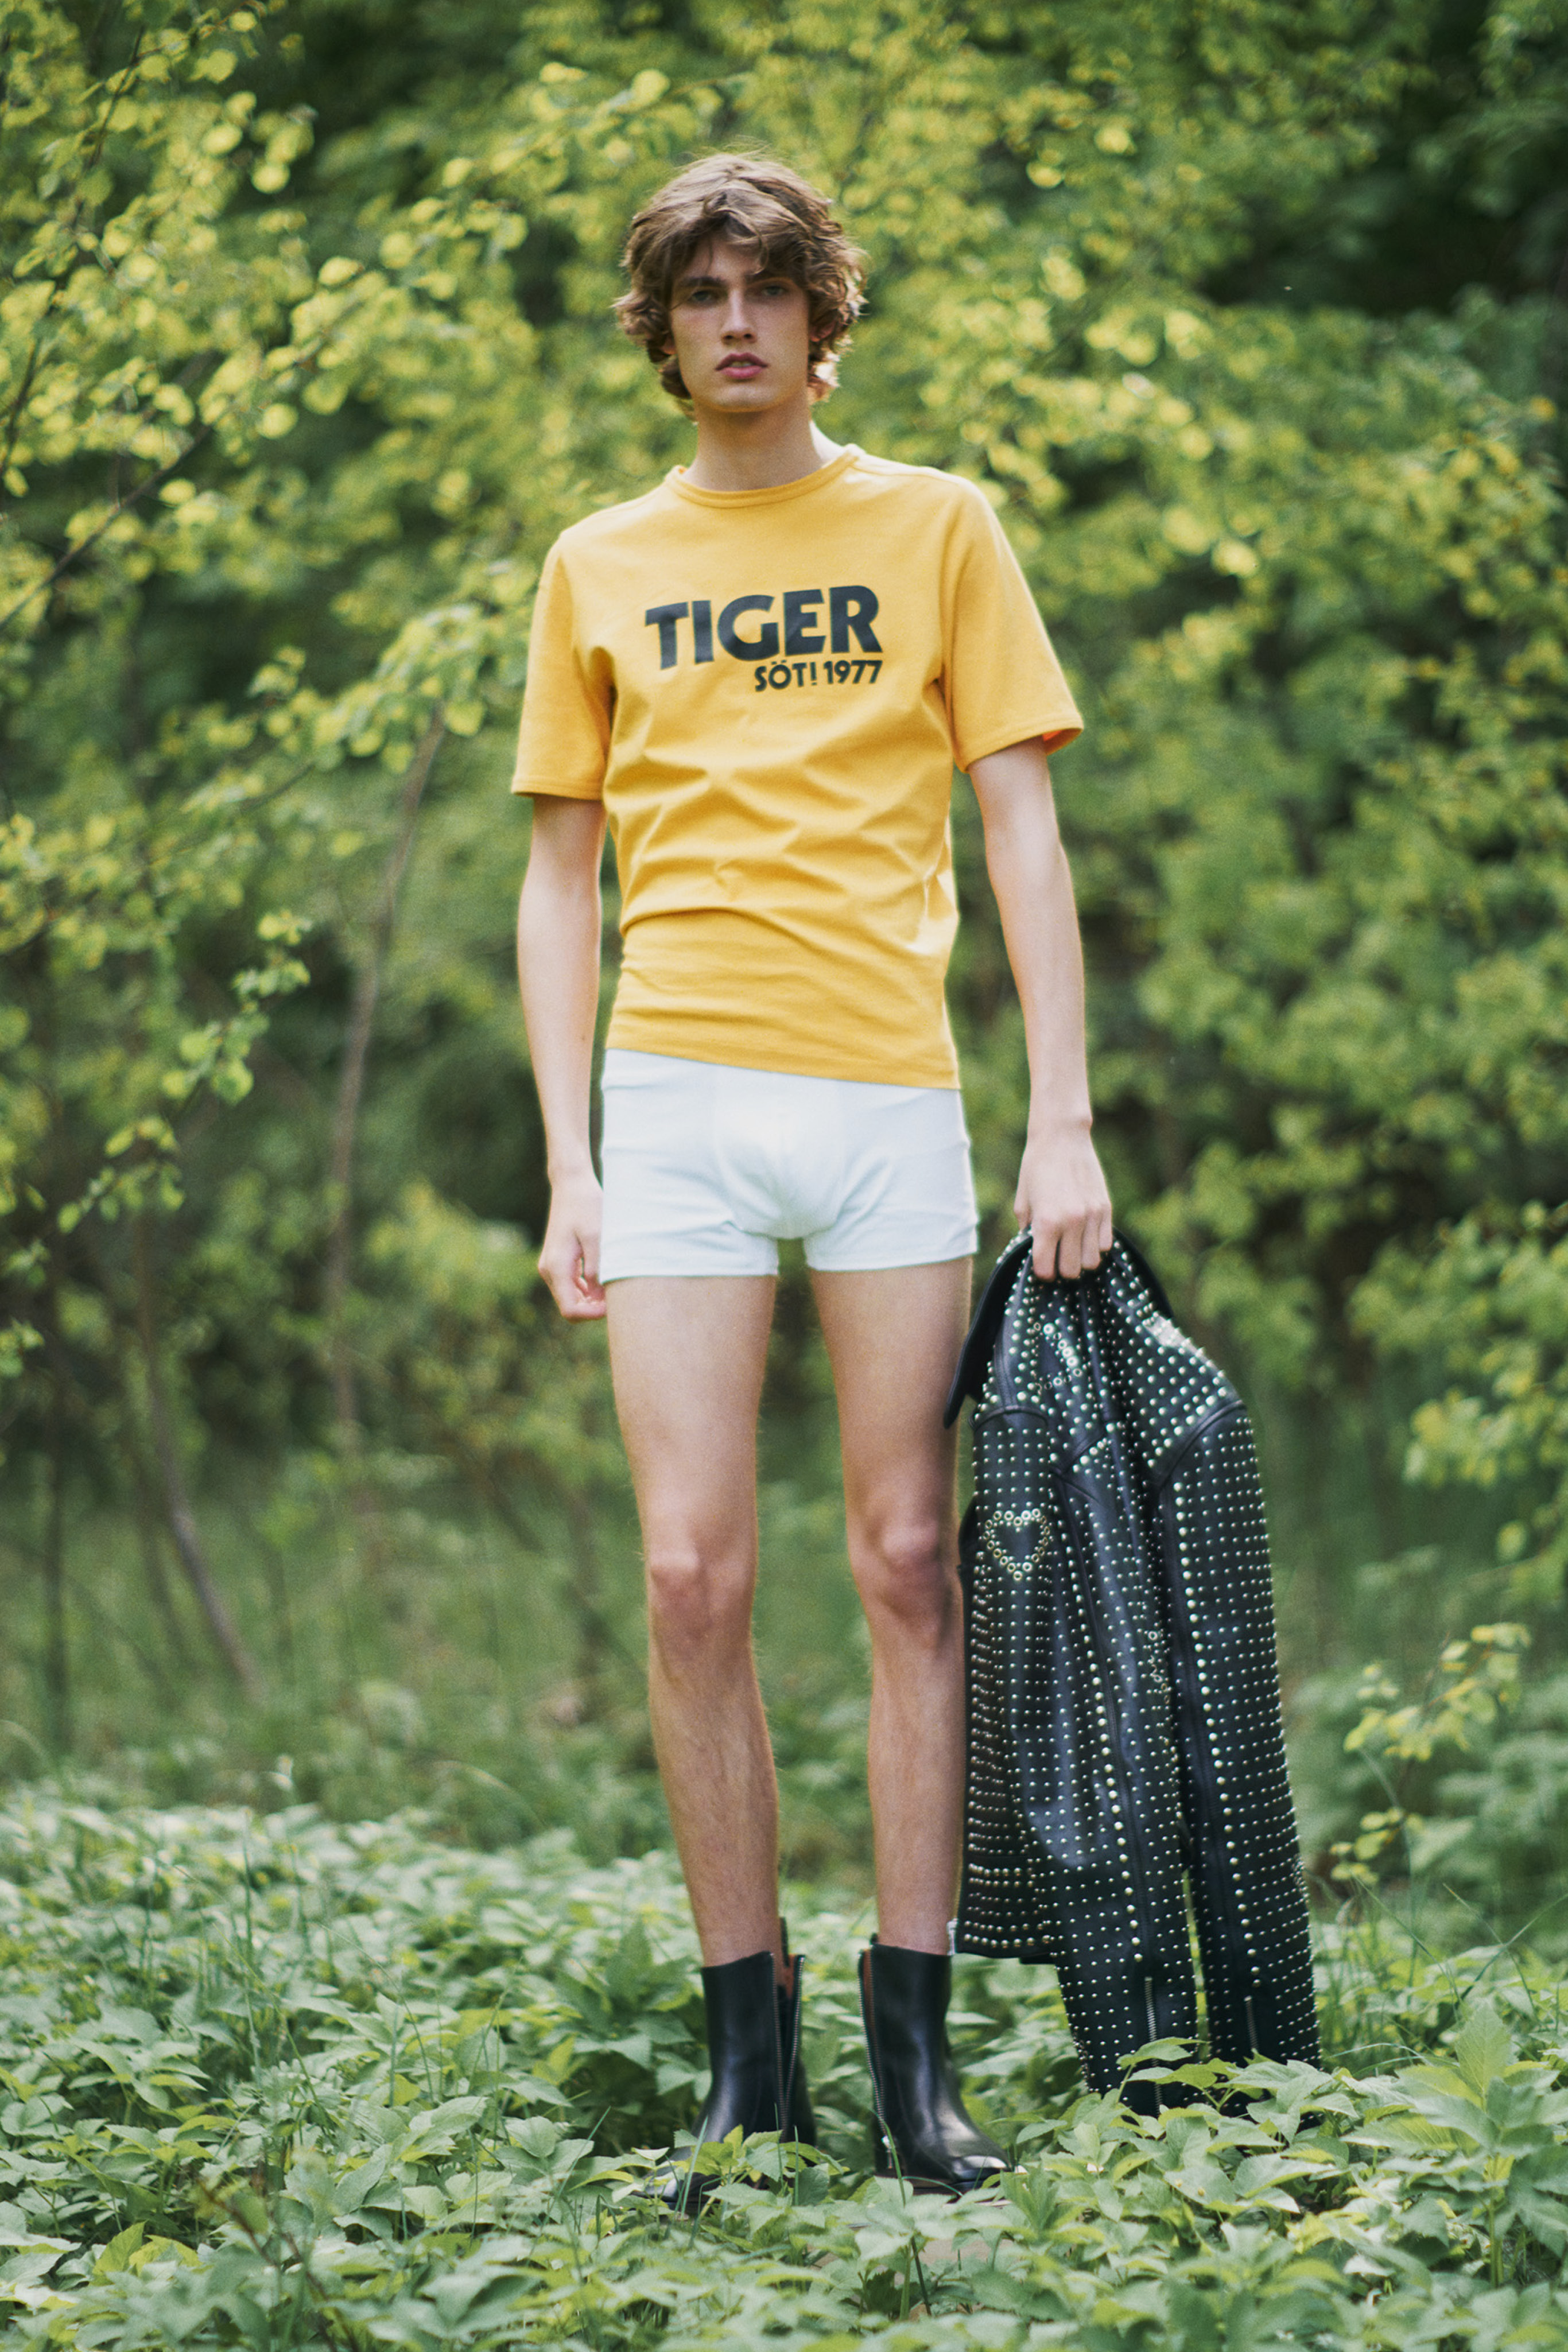 Man in Tiger of Sweden tee shirt